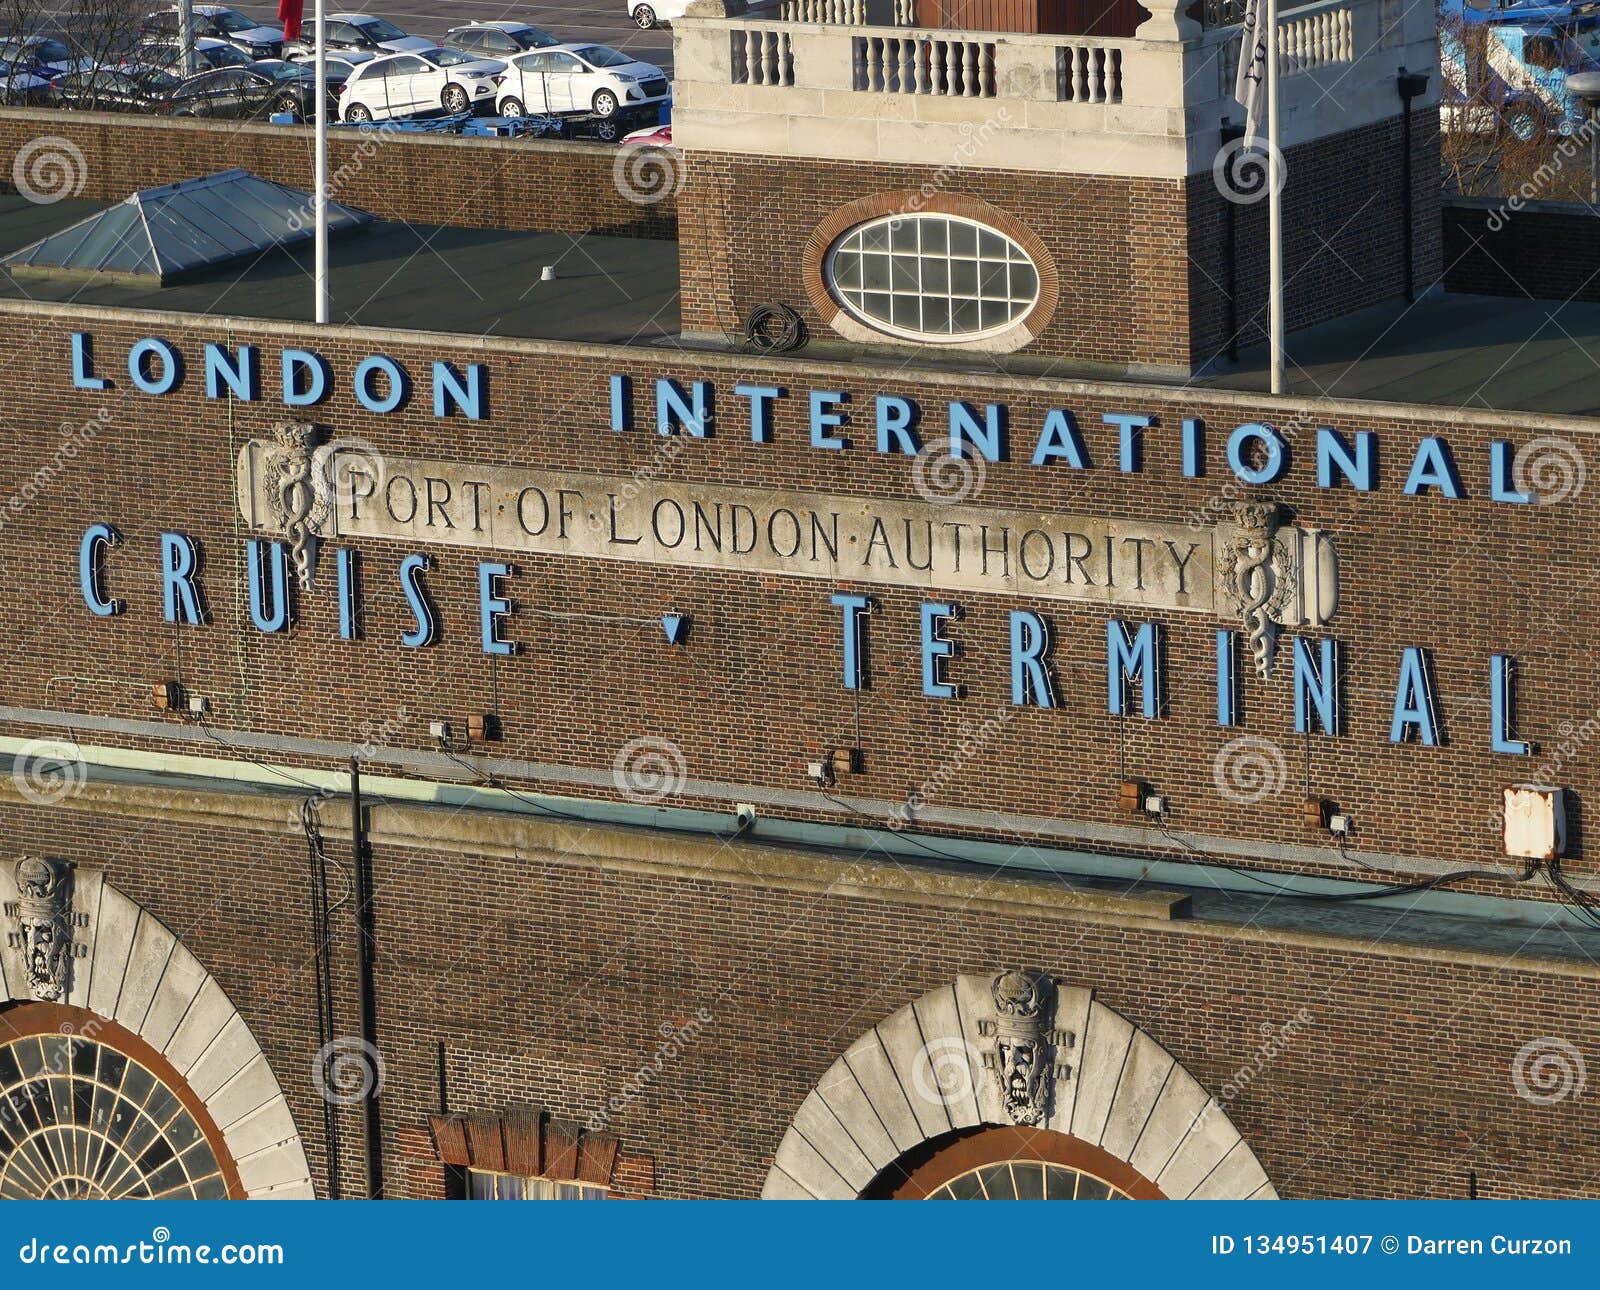 london international cruise terminal address